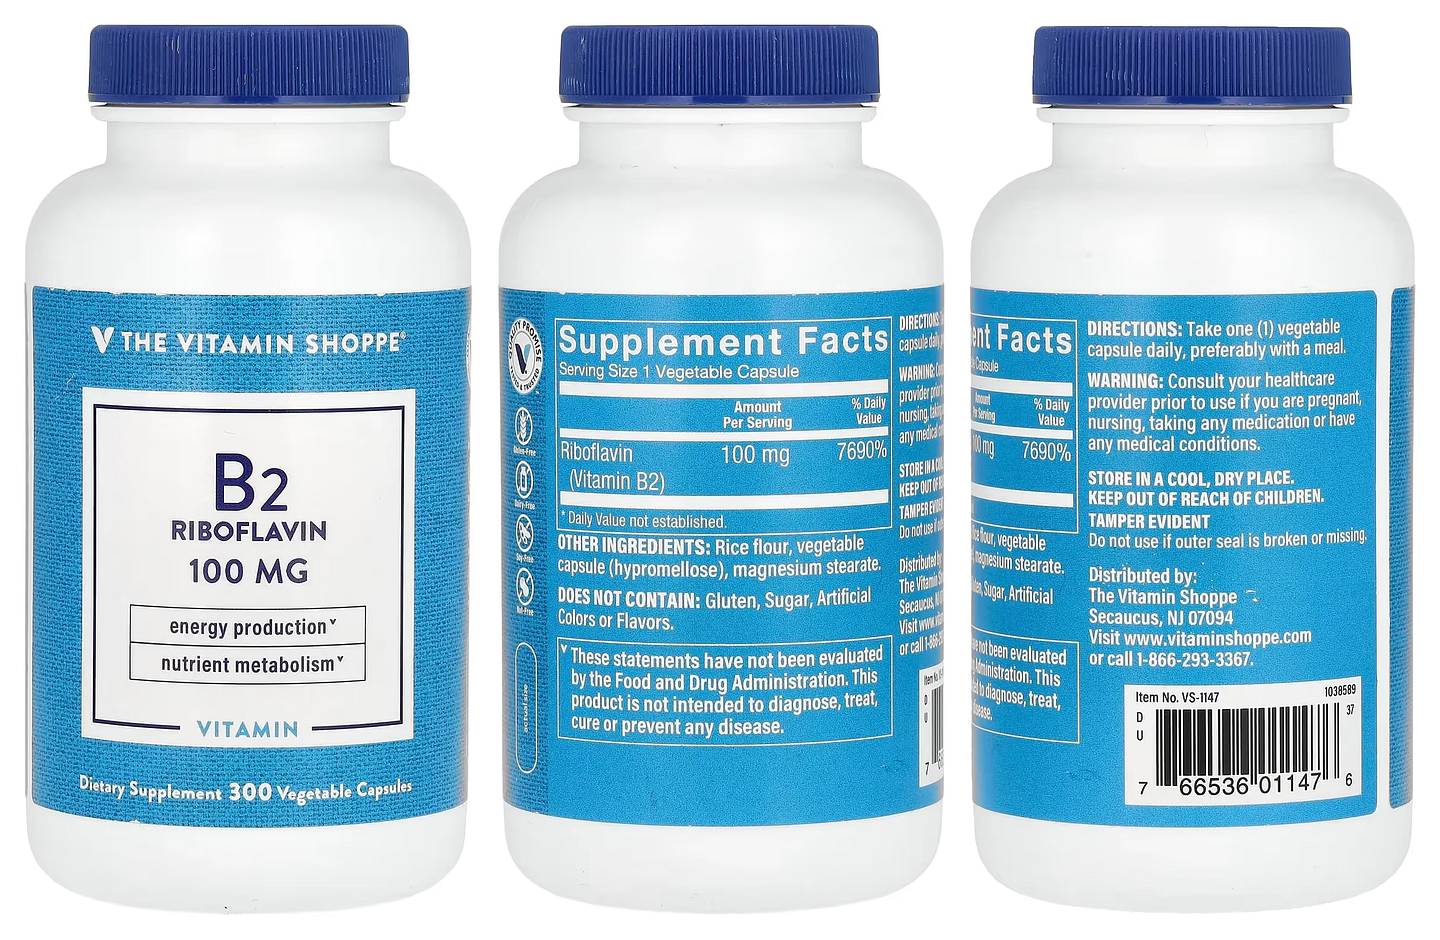 The Vitamin Shoppe, Vitamin B2 Riboflavin packaging